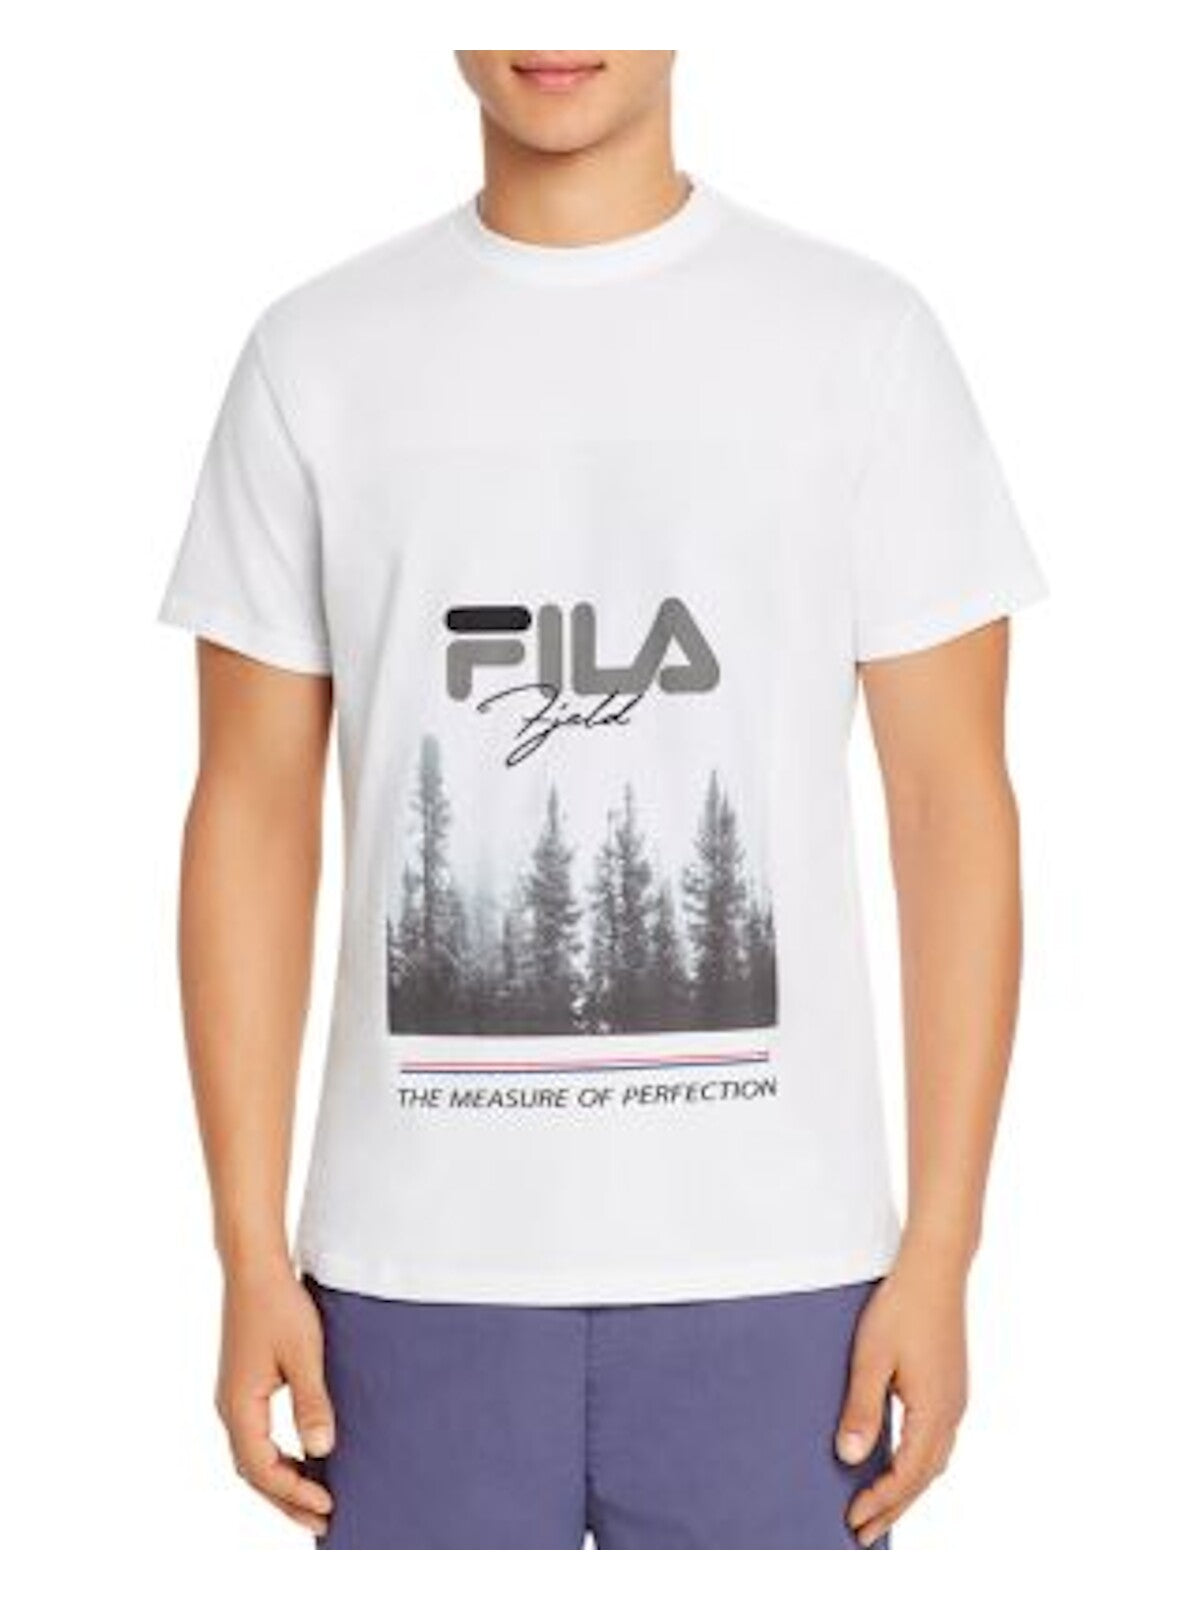 FILA Mens White Logo Graphic Short Sleeve Classic Fit T-Shirt M